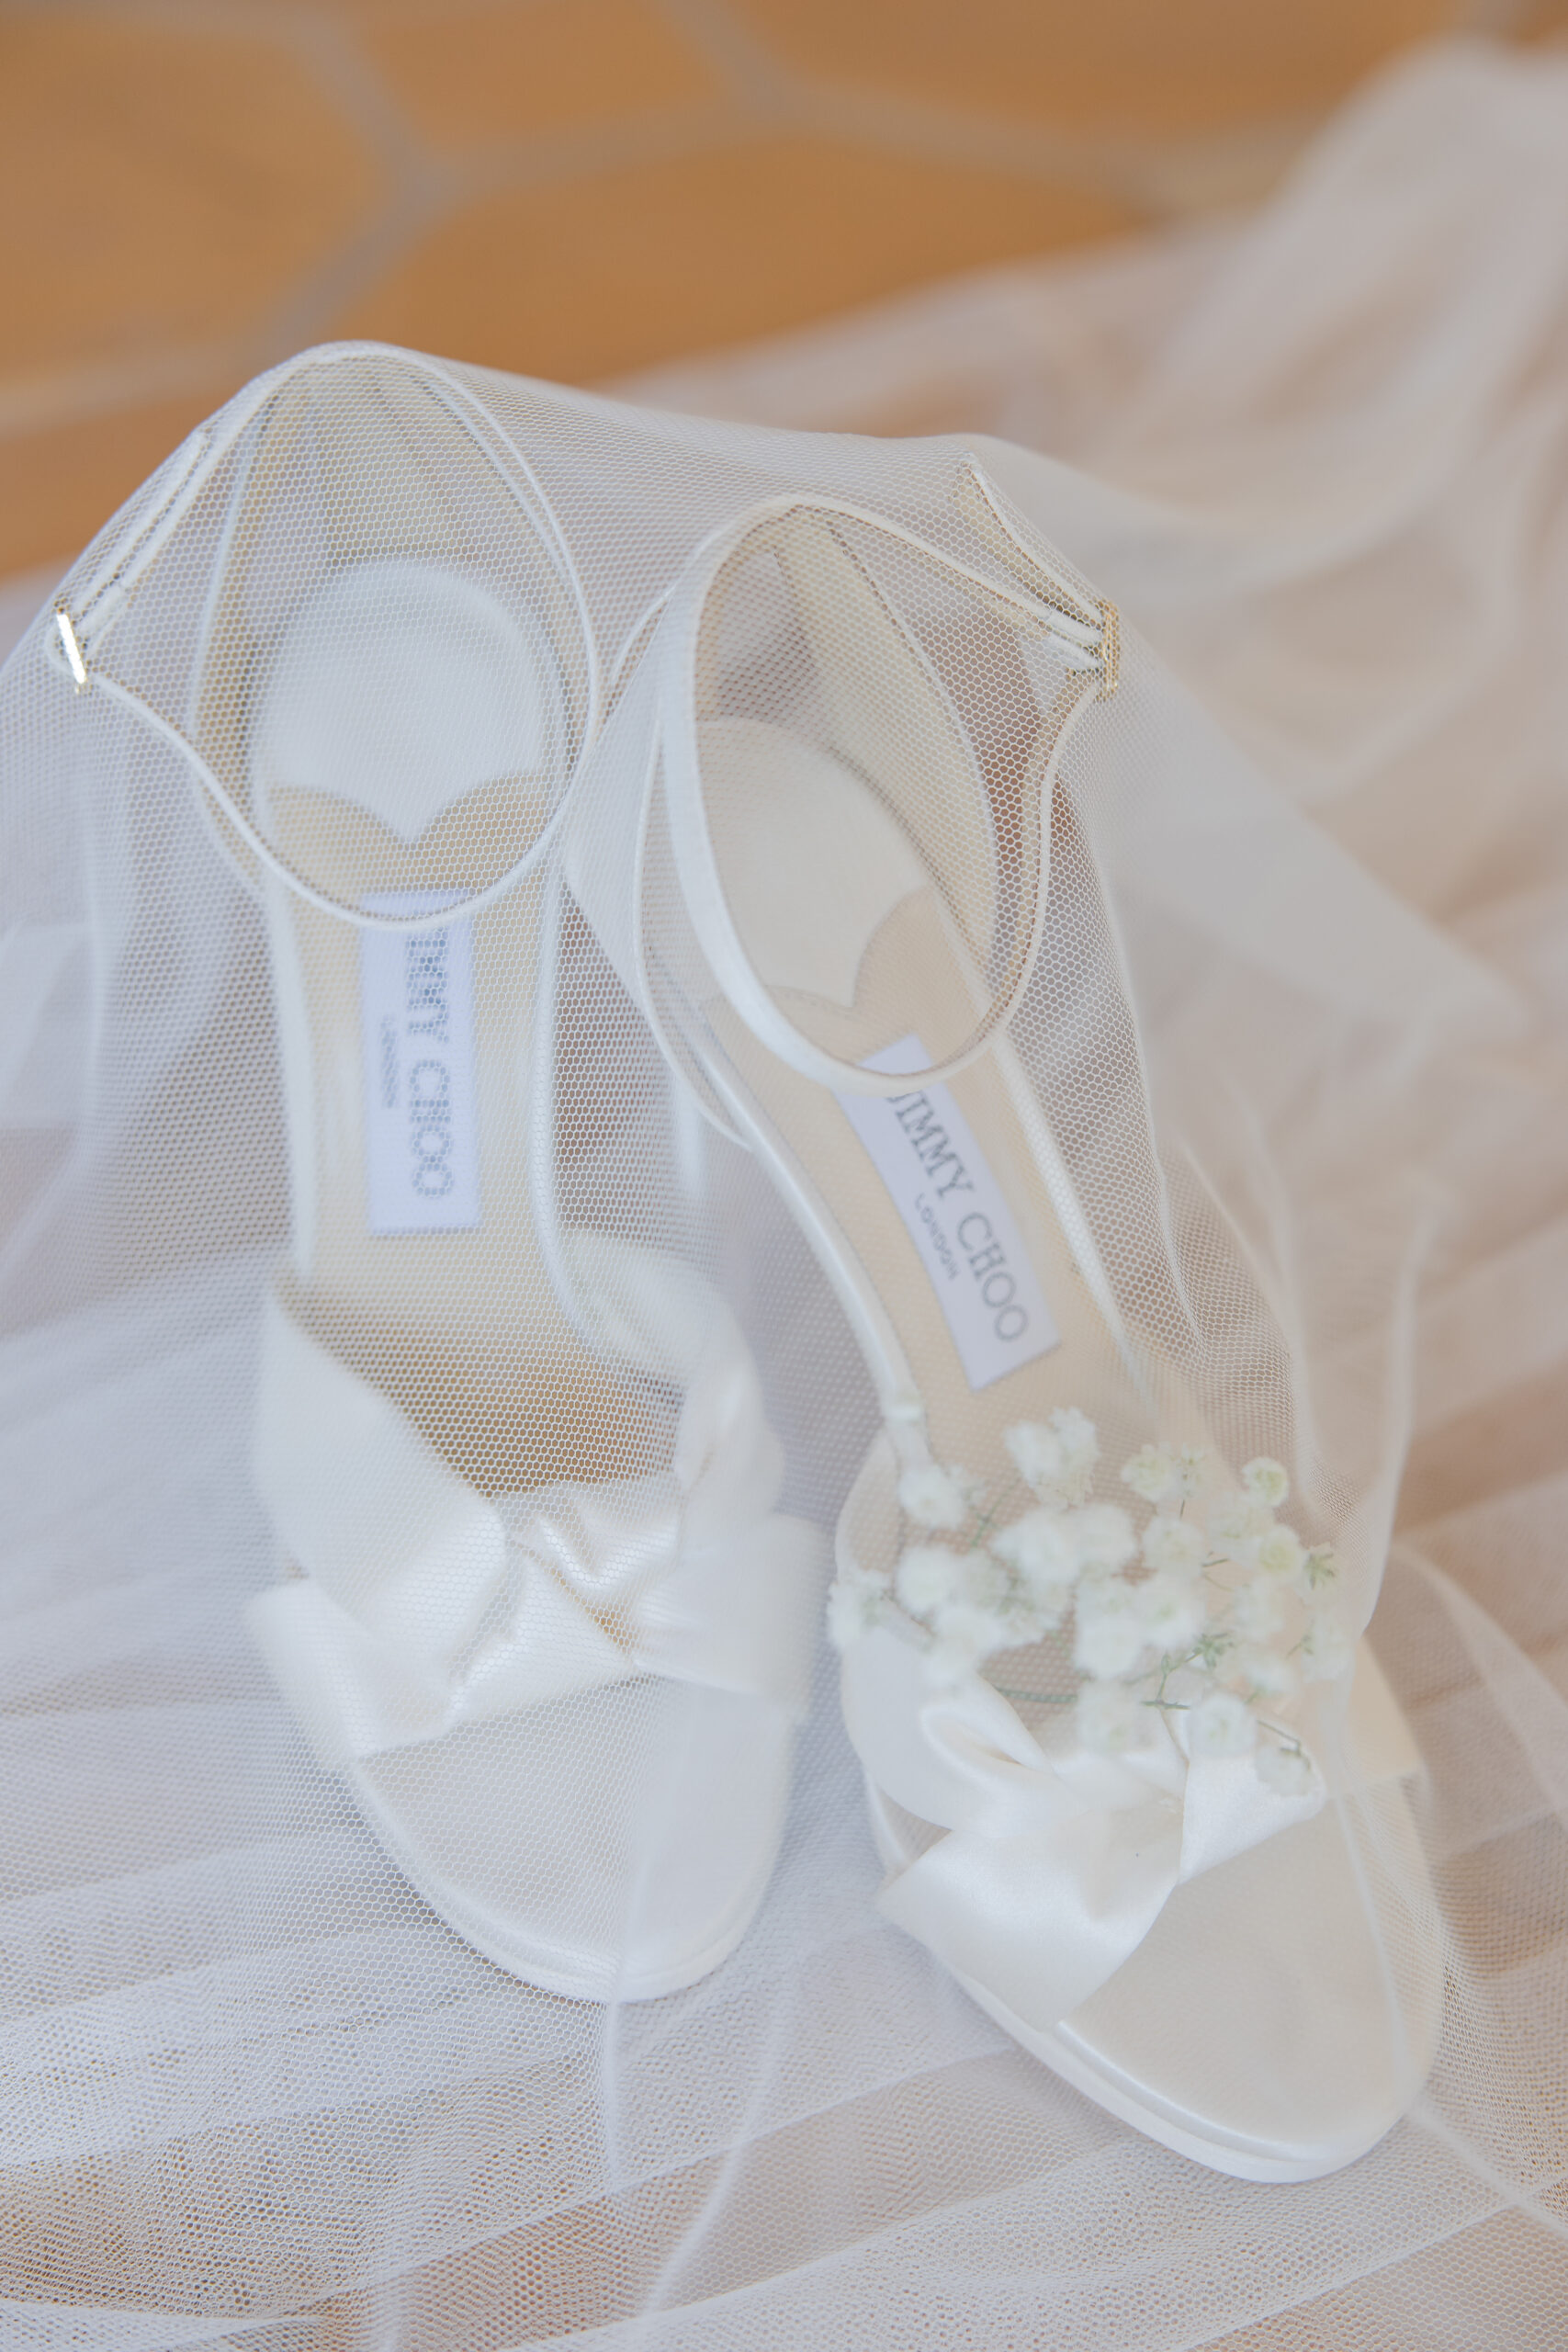 Jimmy Choo bridal shoe flat lay.